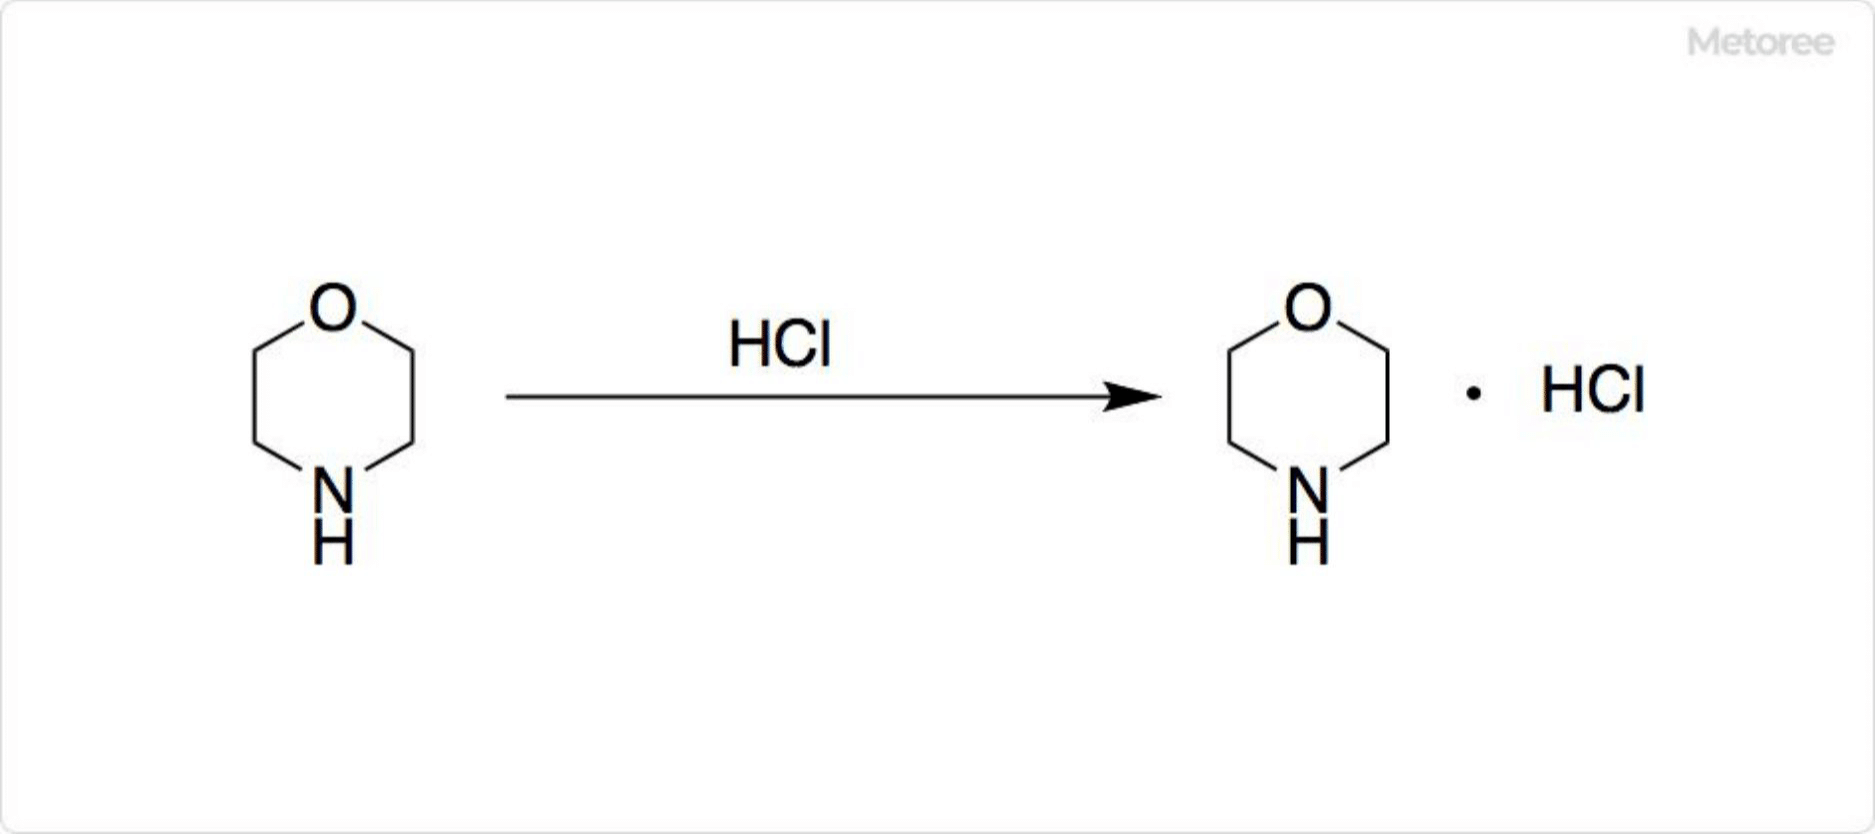 Figure 3. Reaction of morpholine